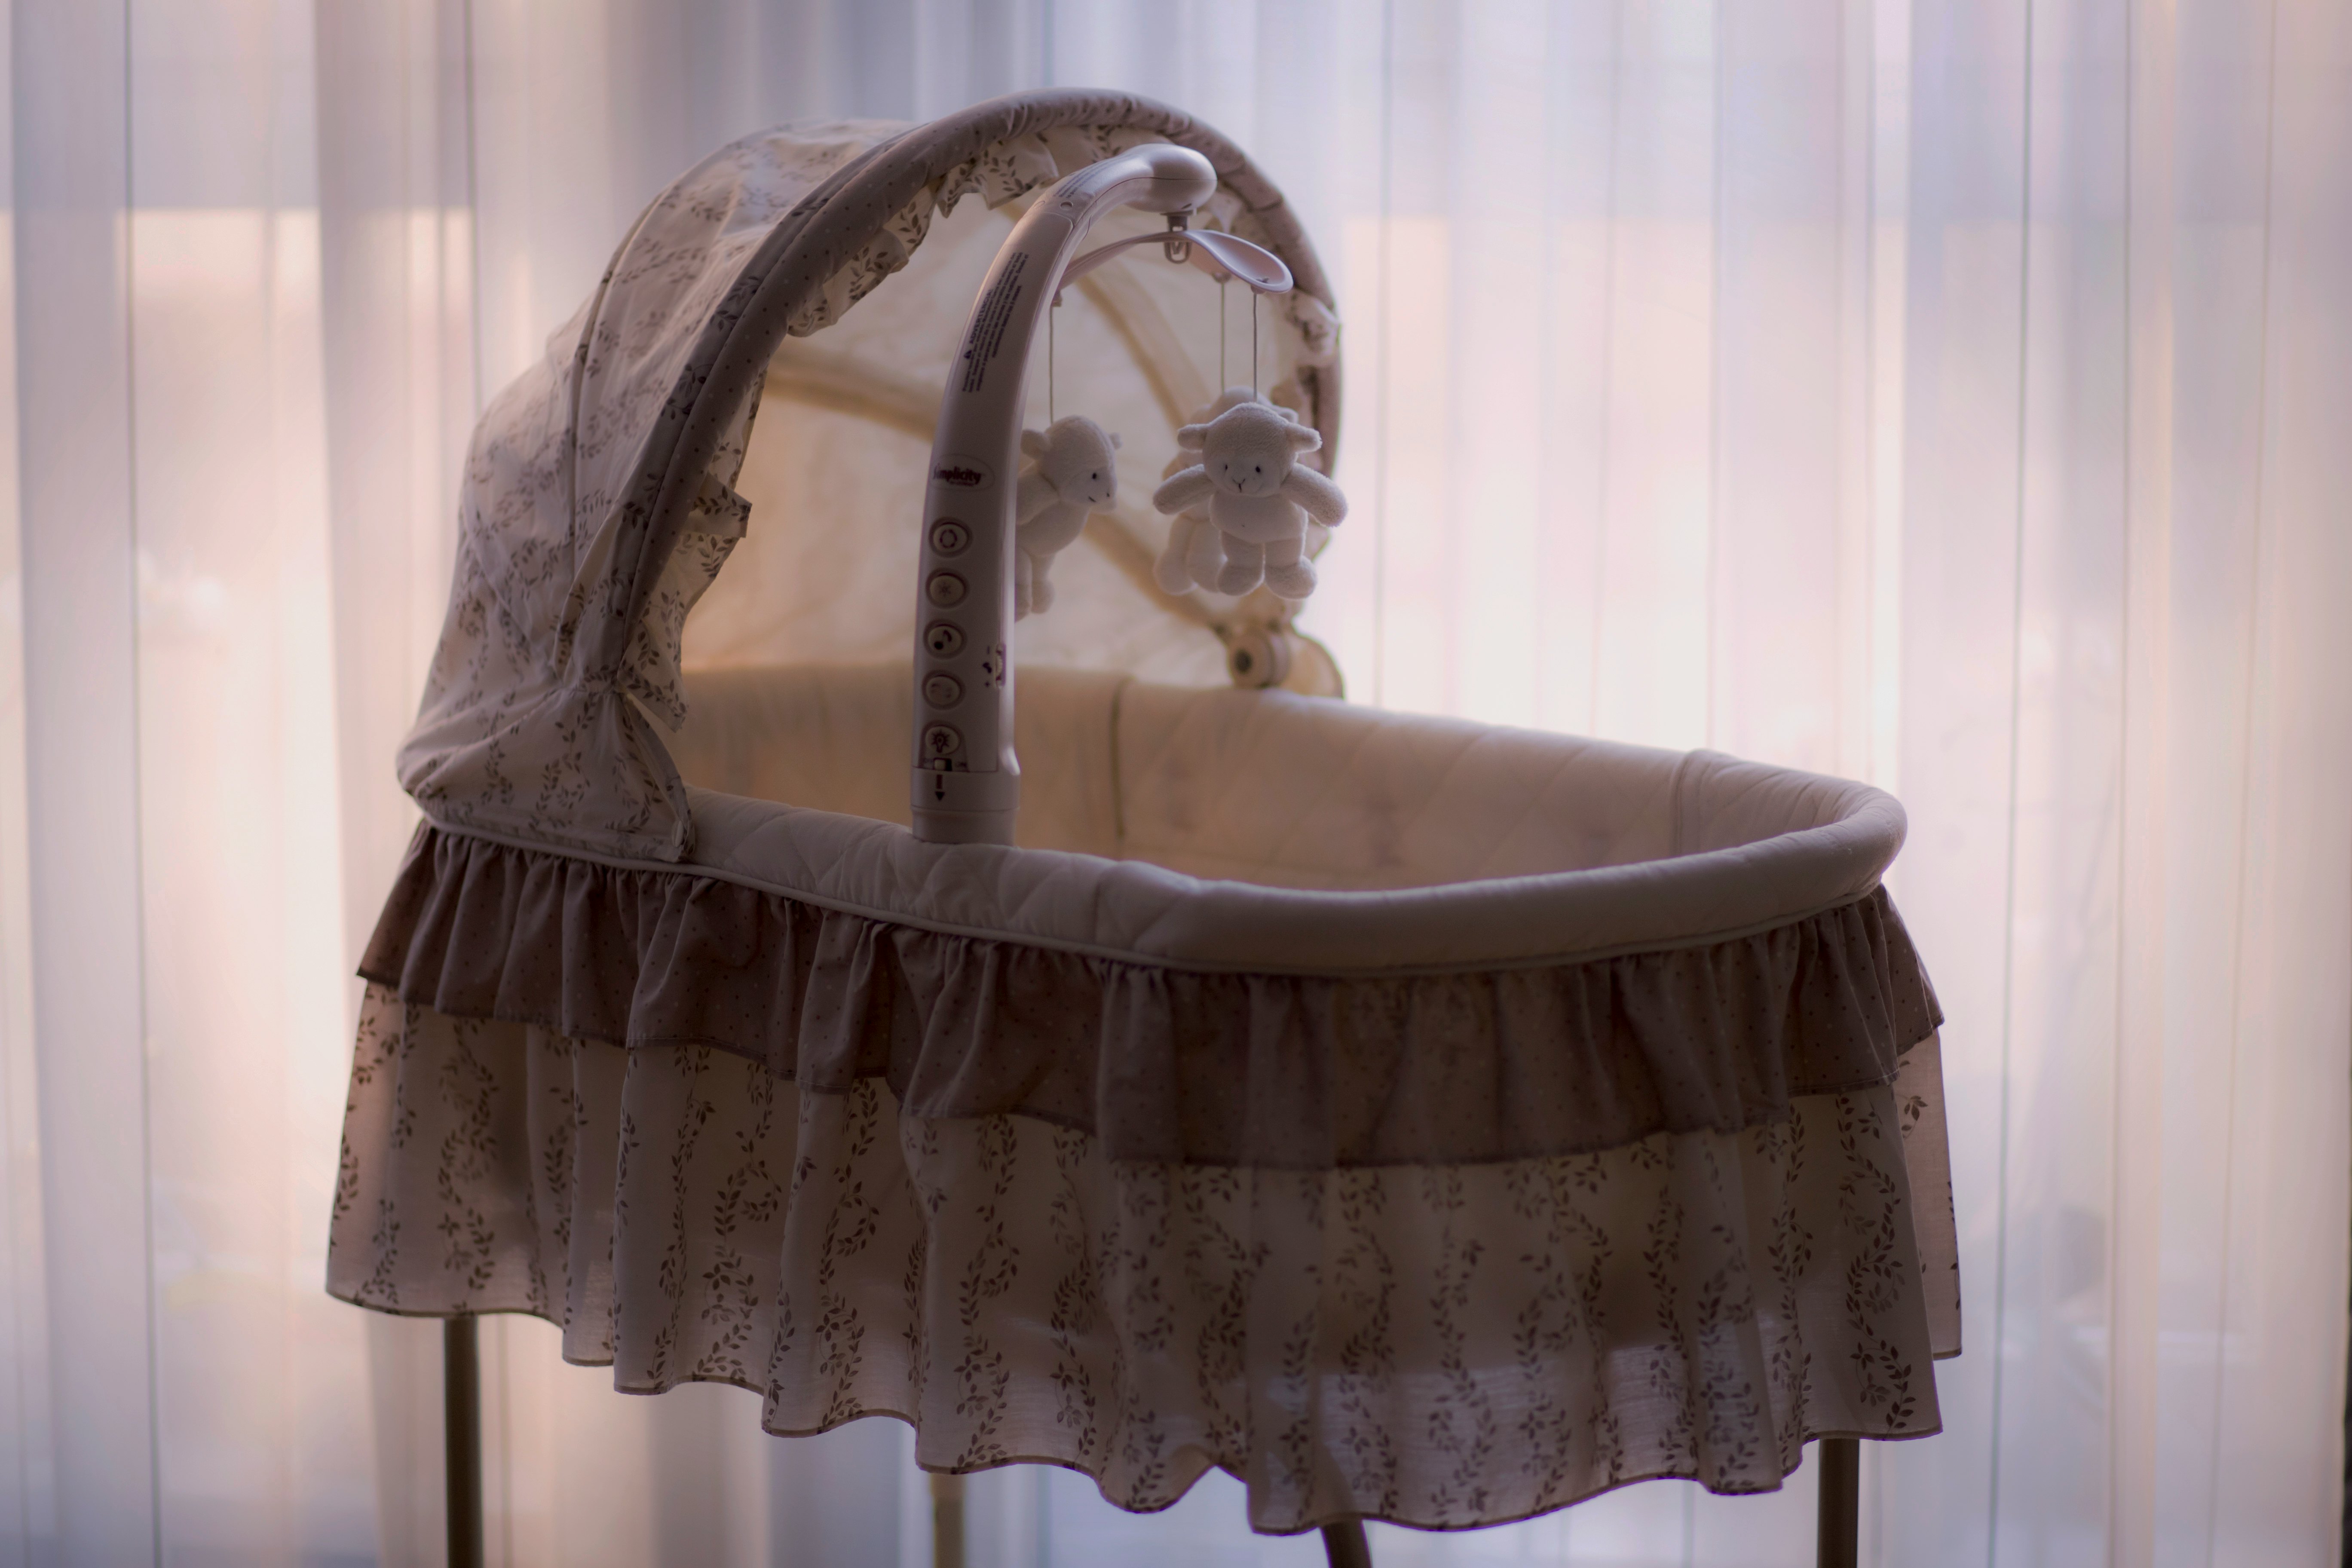 safest bassinets for baby